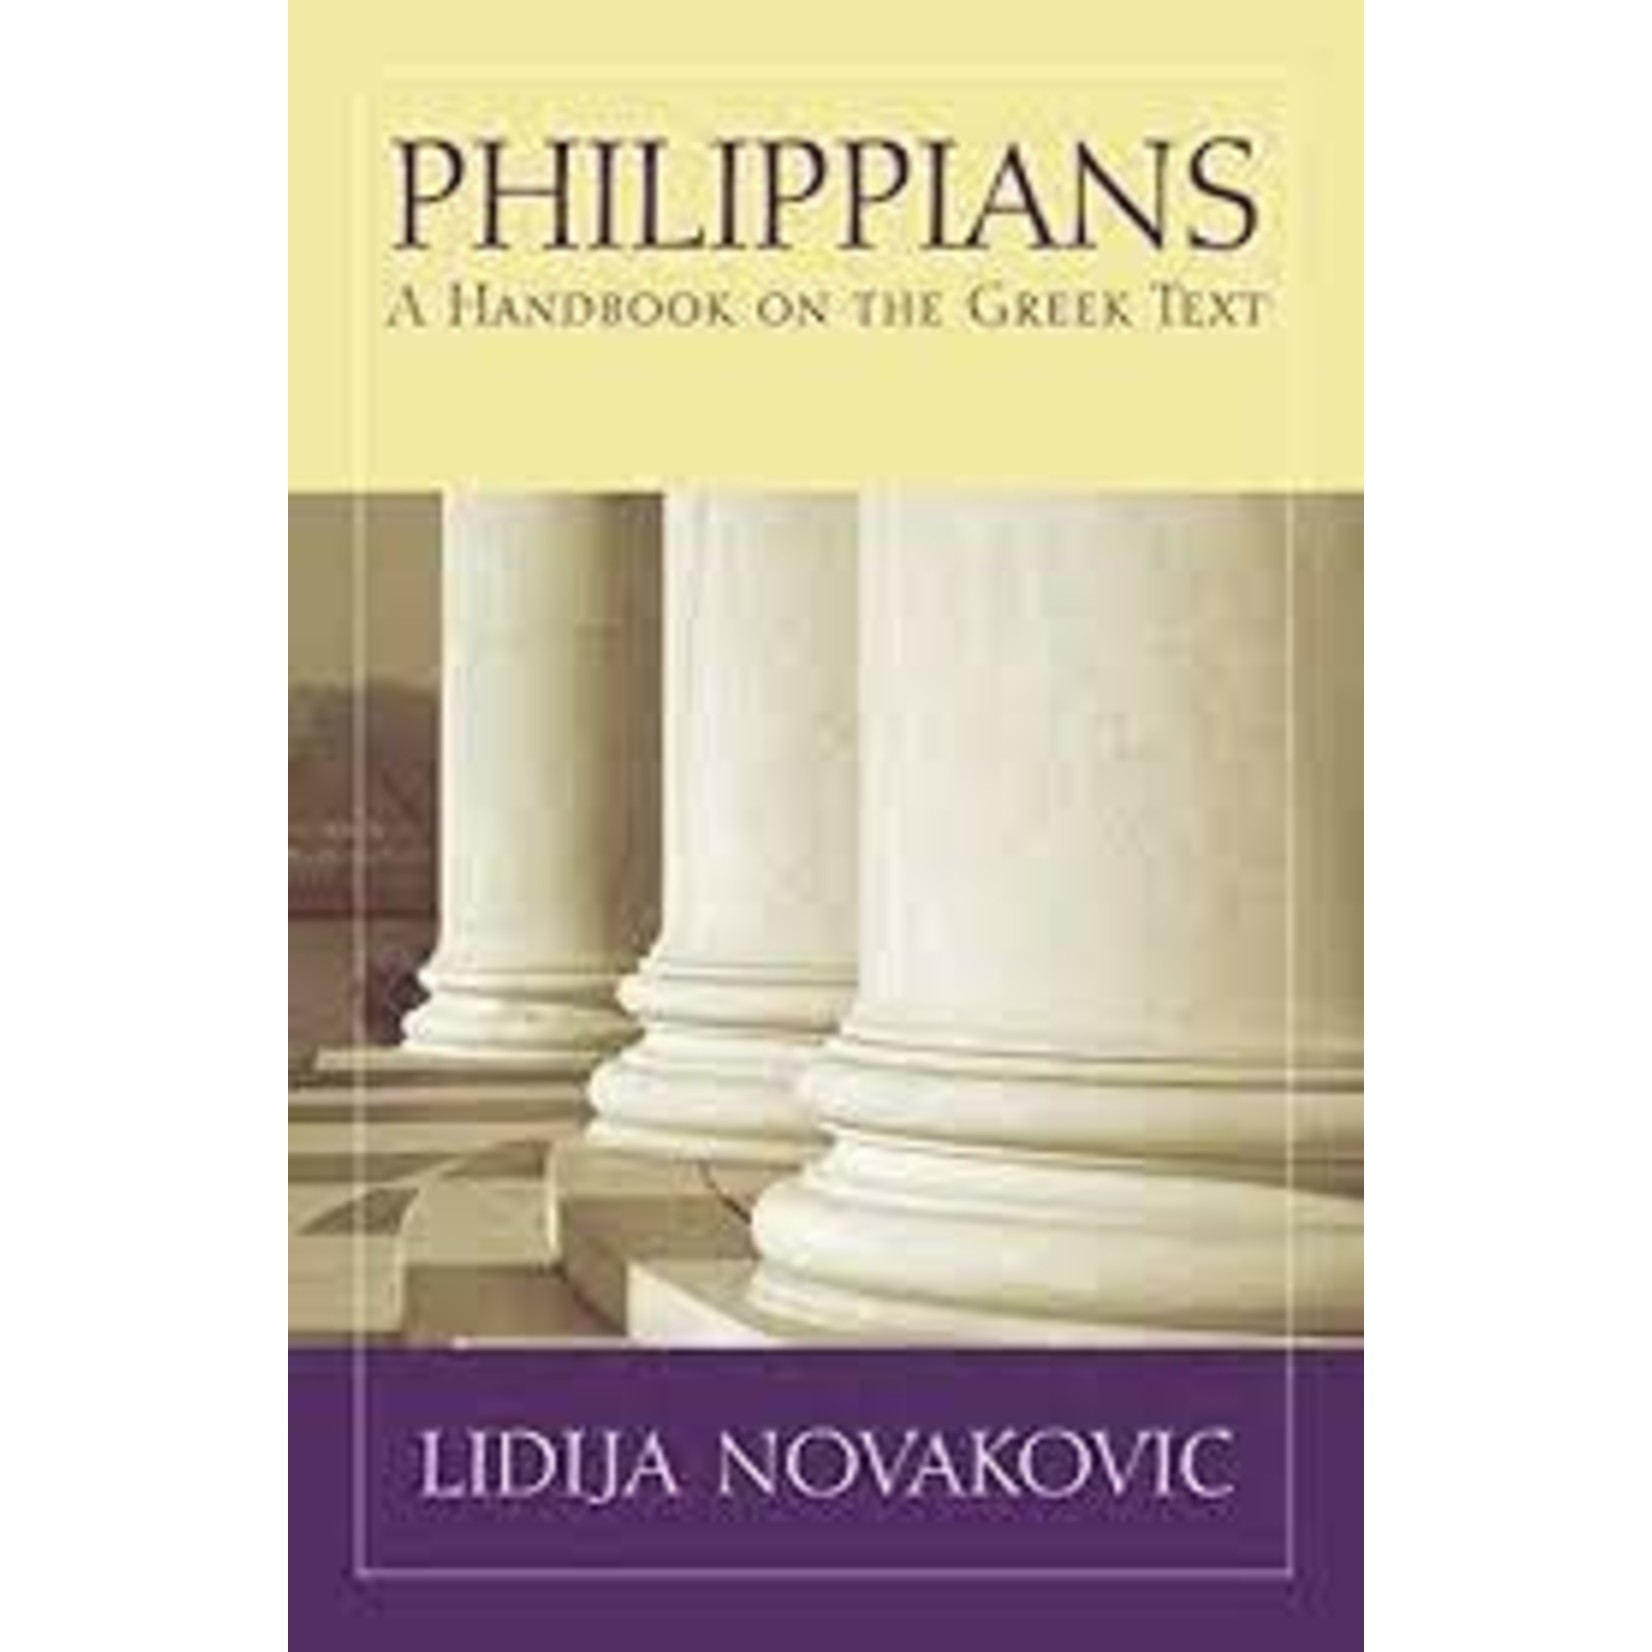 Philippians: A Handbook on the Greek Text